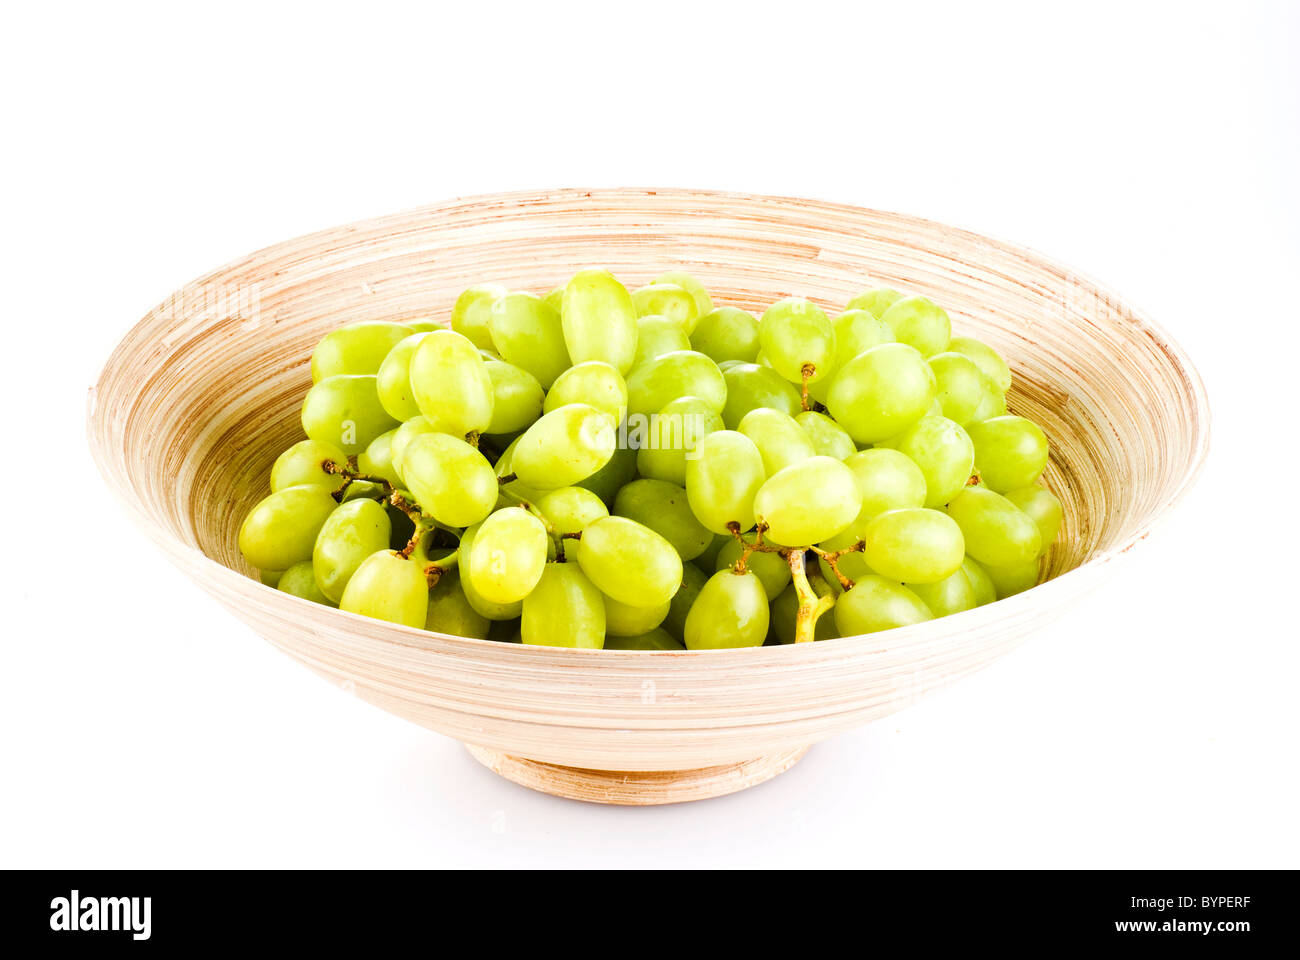 https://c8.alamy.com/comp/BYPERF/grape-fruits-in-wooden-bowl-isolated-over-white-BYPERF.jpg